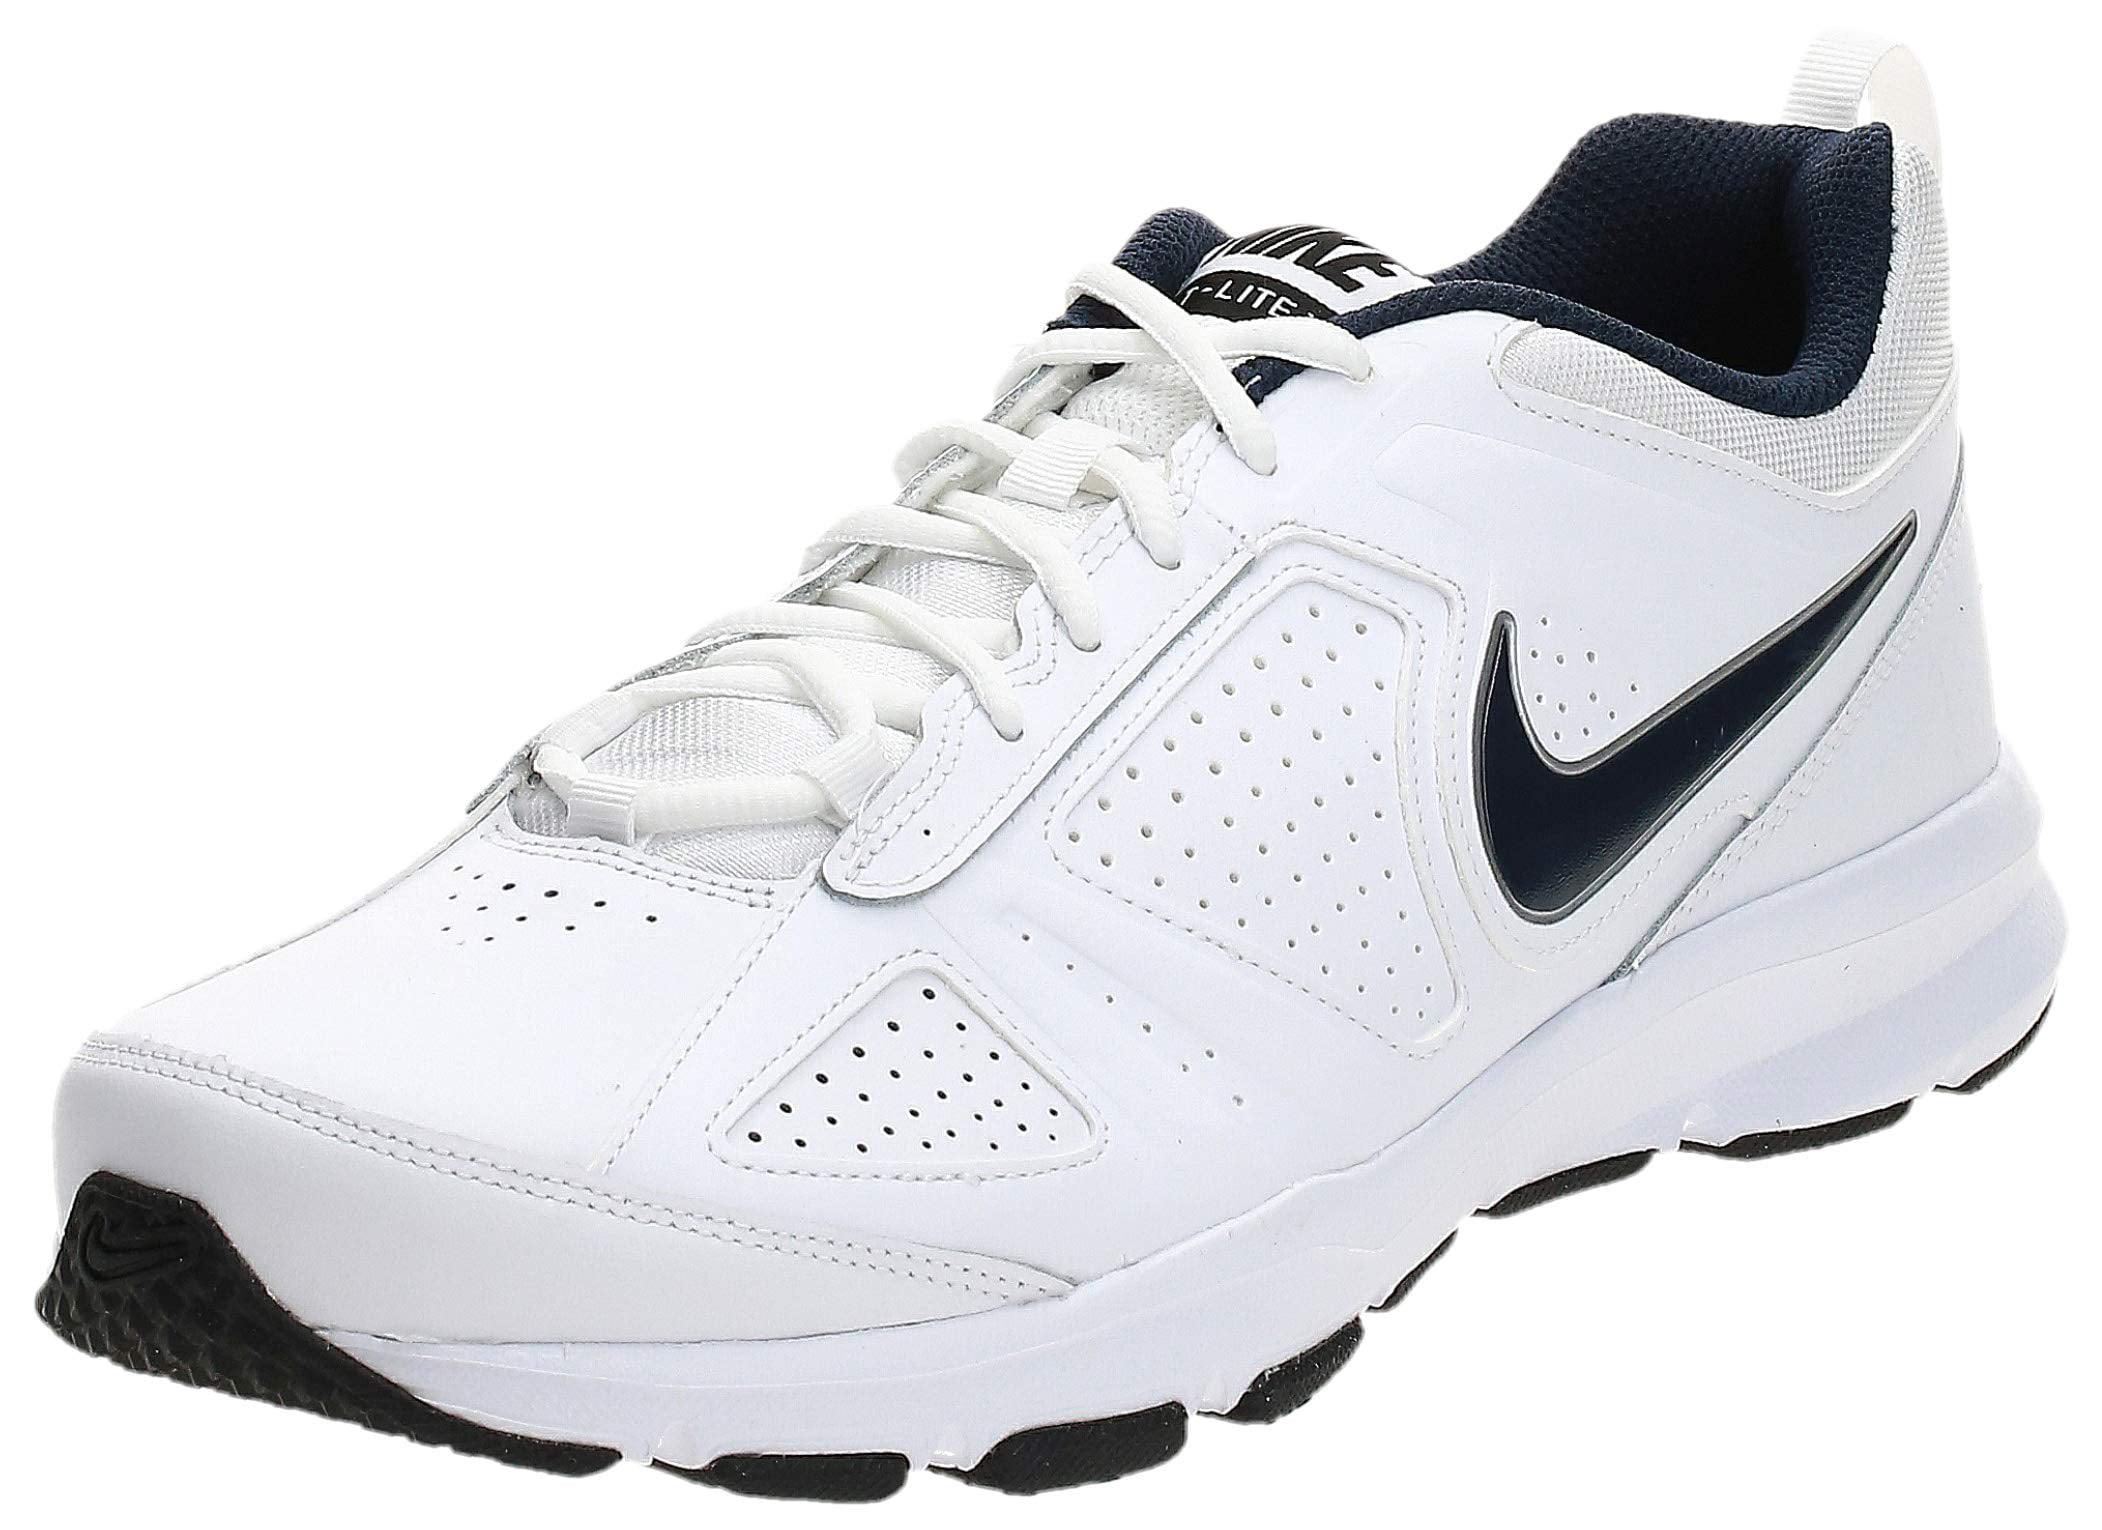 wildernis verontreiniging ethiek Nike T-Lite Xi Mens Running Trainers 616544 Sneakers Shoes - Walmart.com